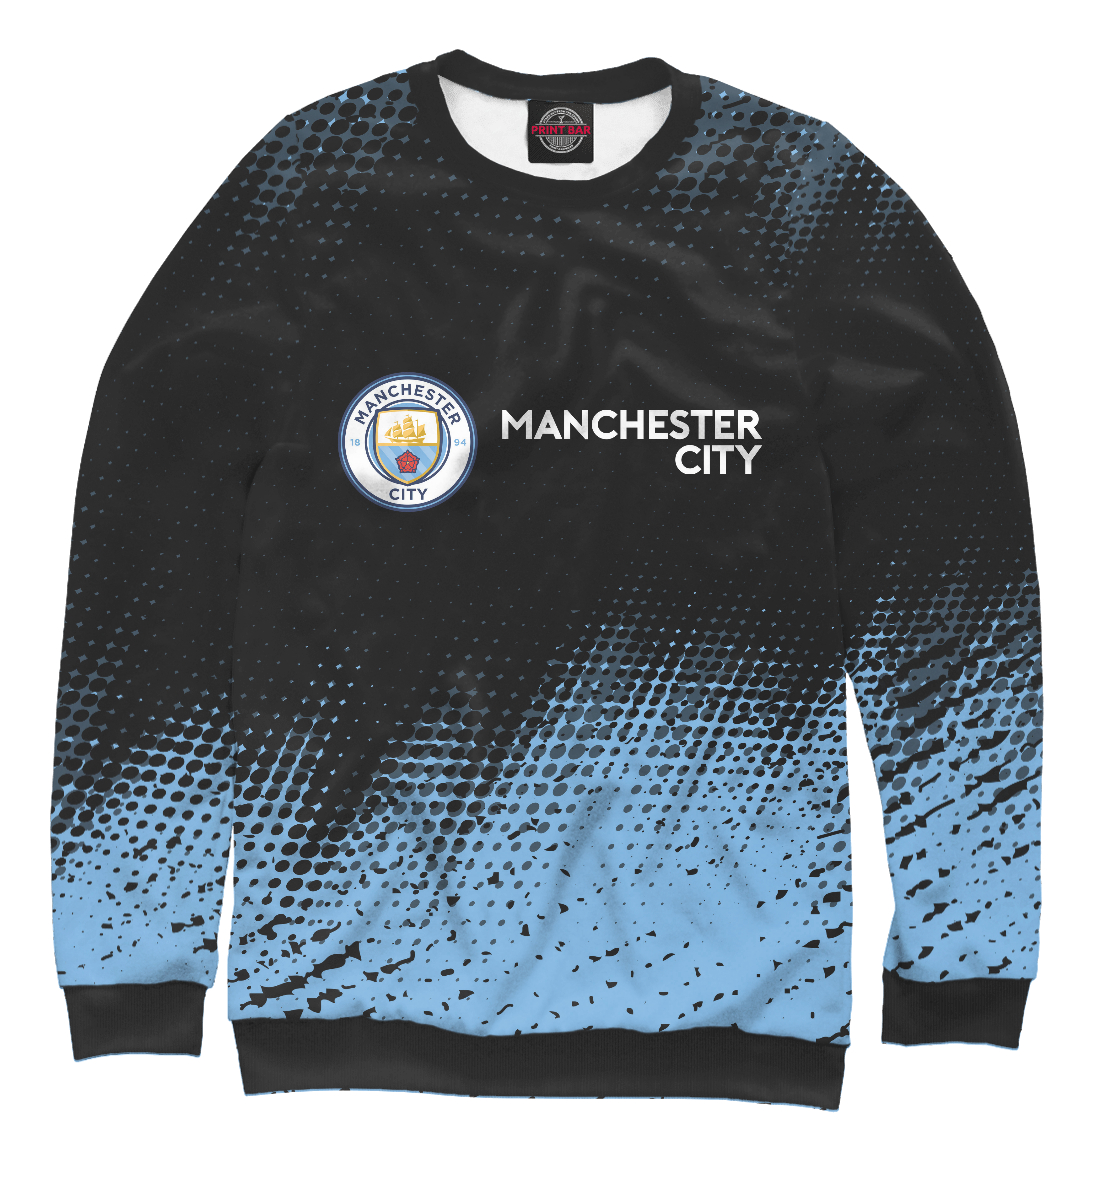 Мужской Свитшот Manchester City, артикул MNC-534545-swi-2mp